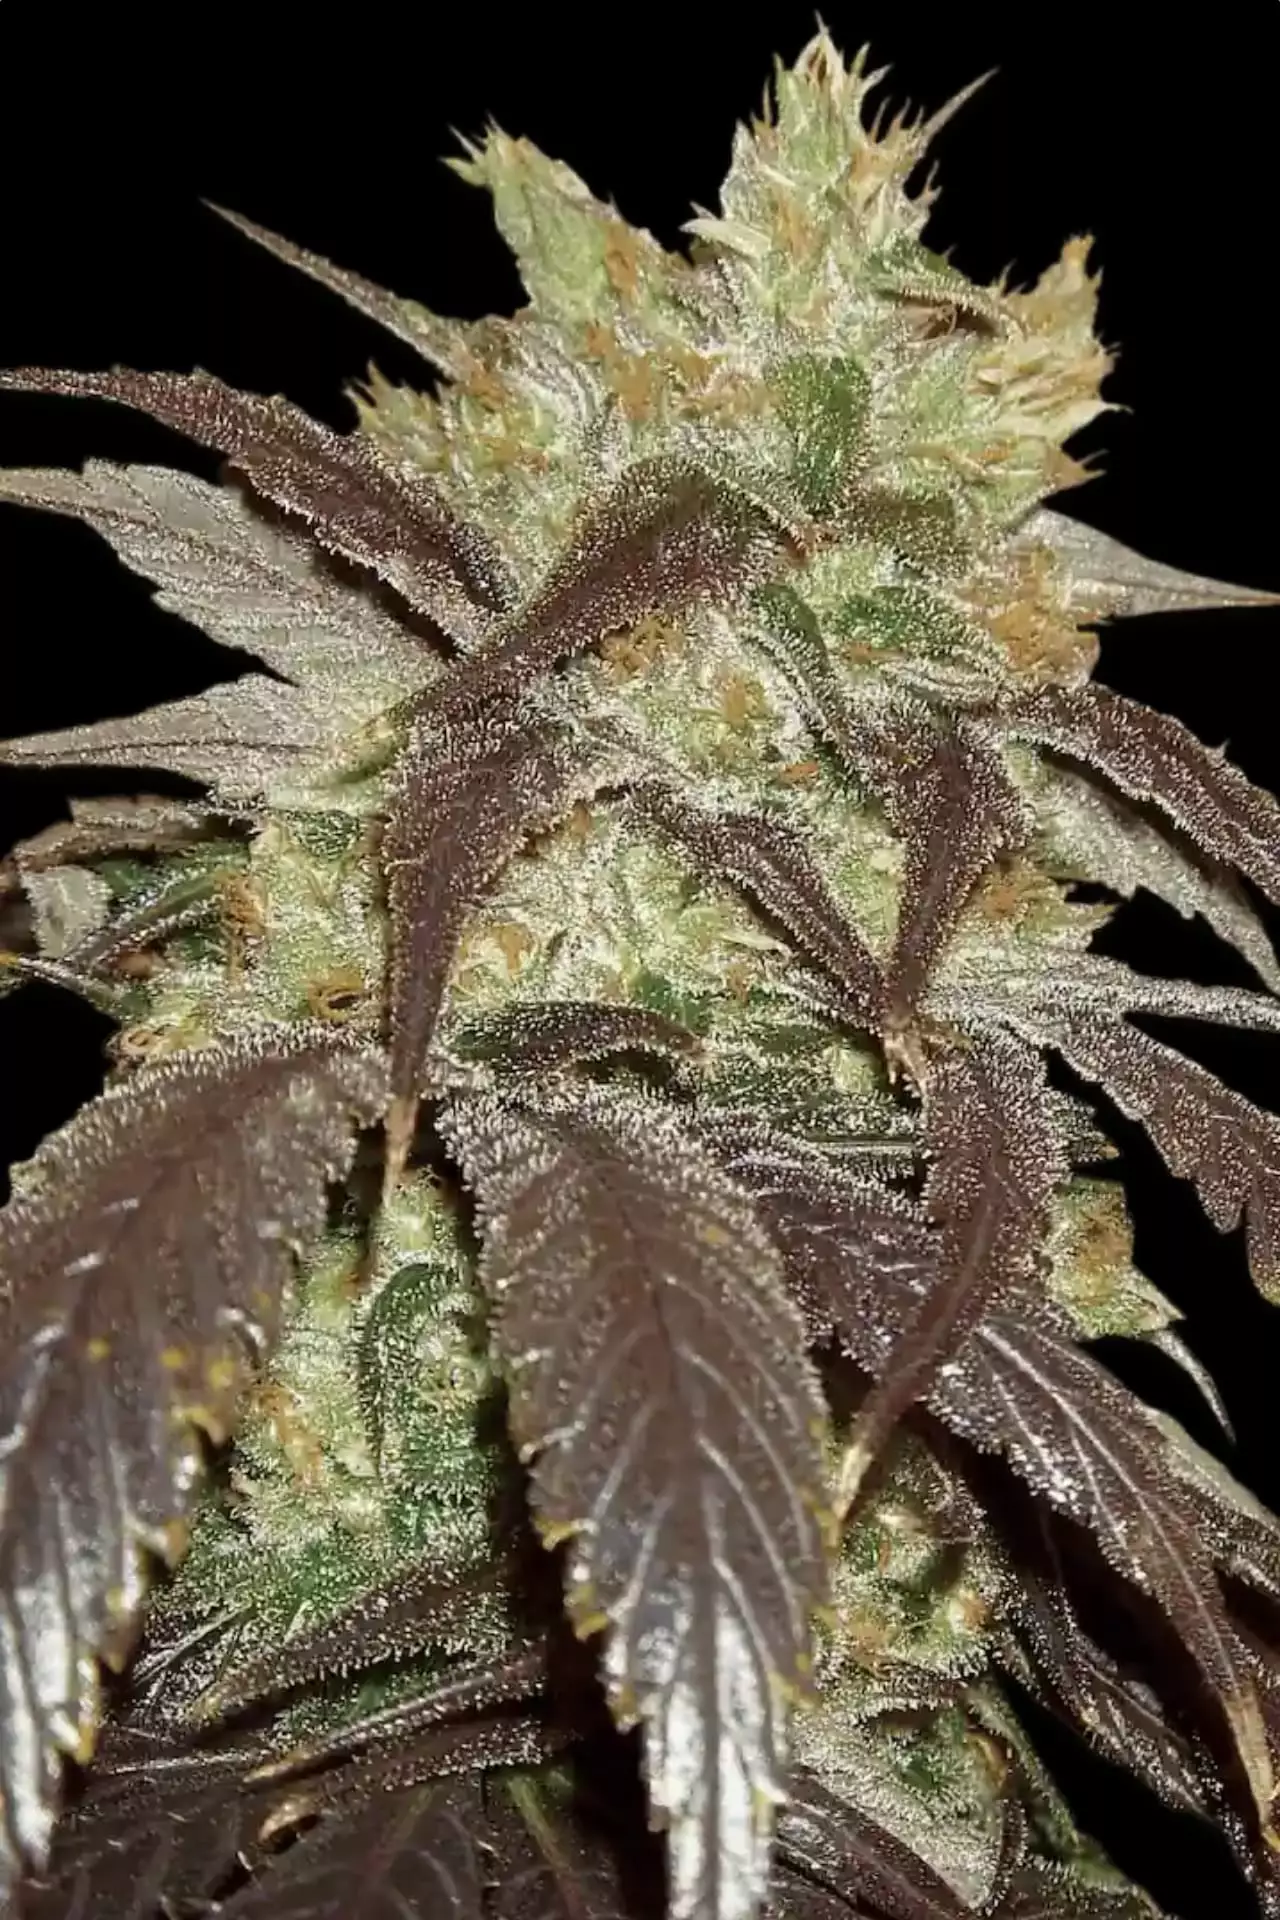 Spoetnik cannabis strain photo with a black background